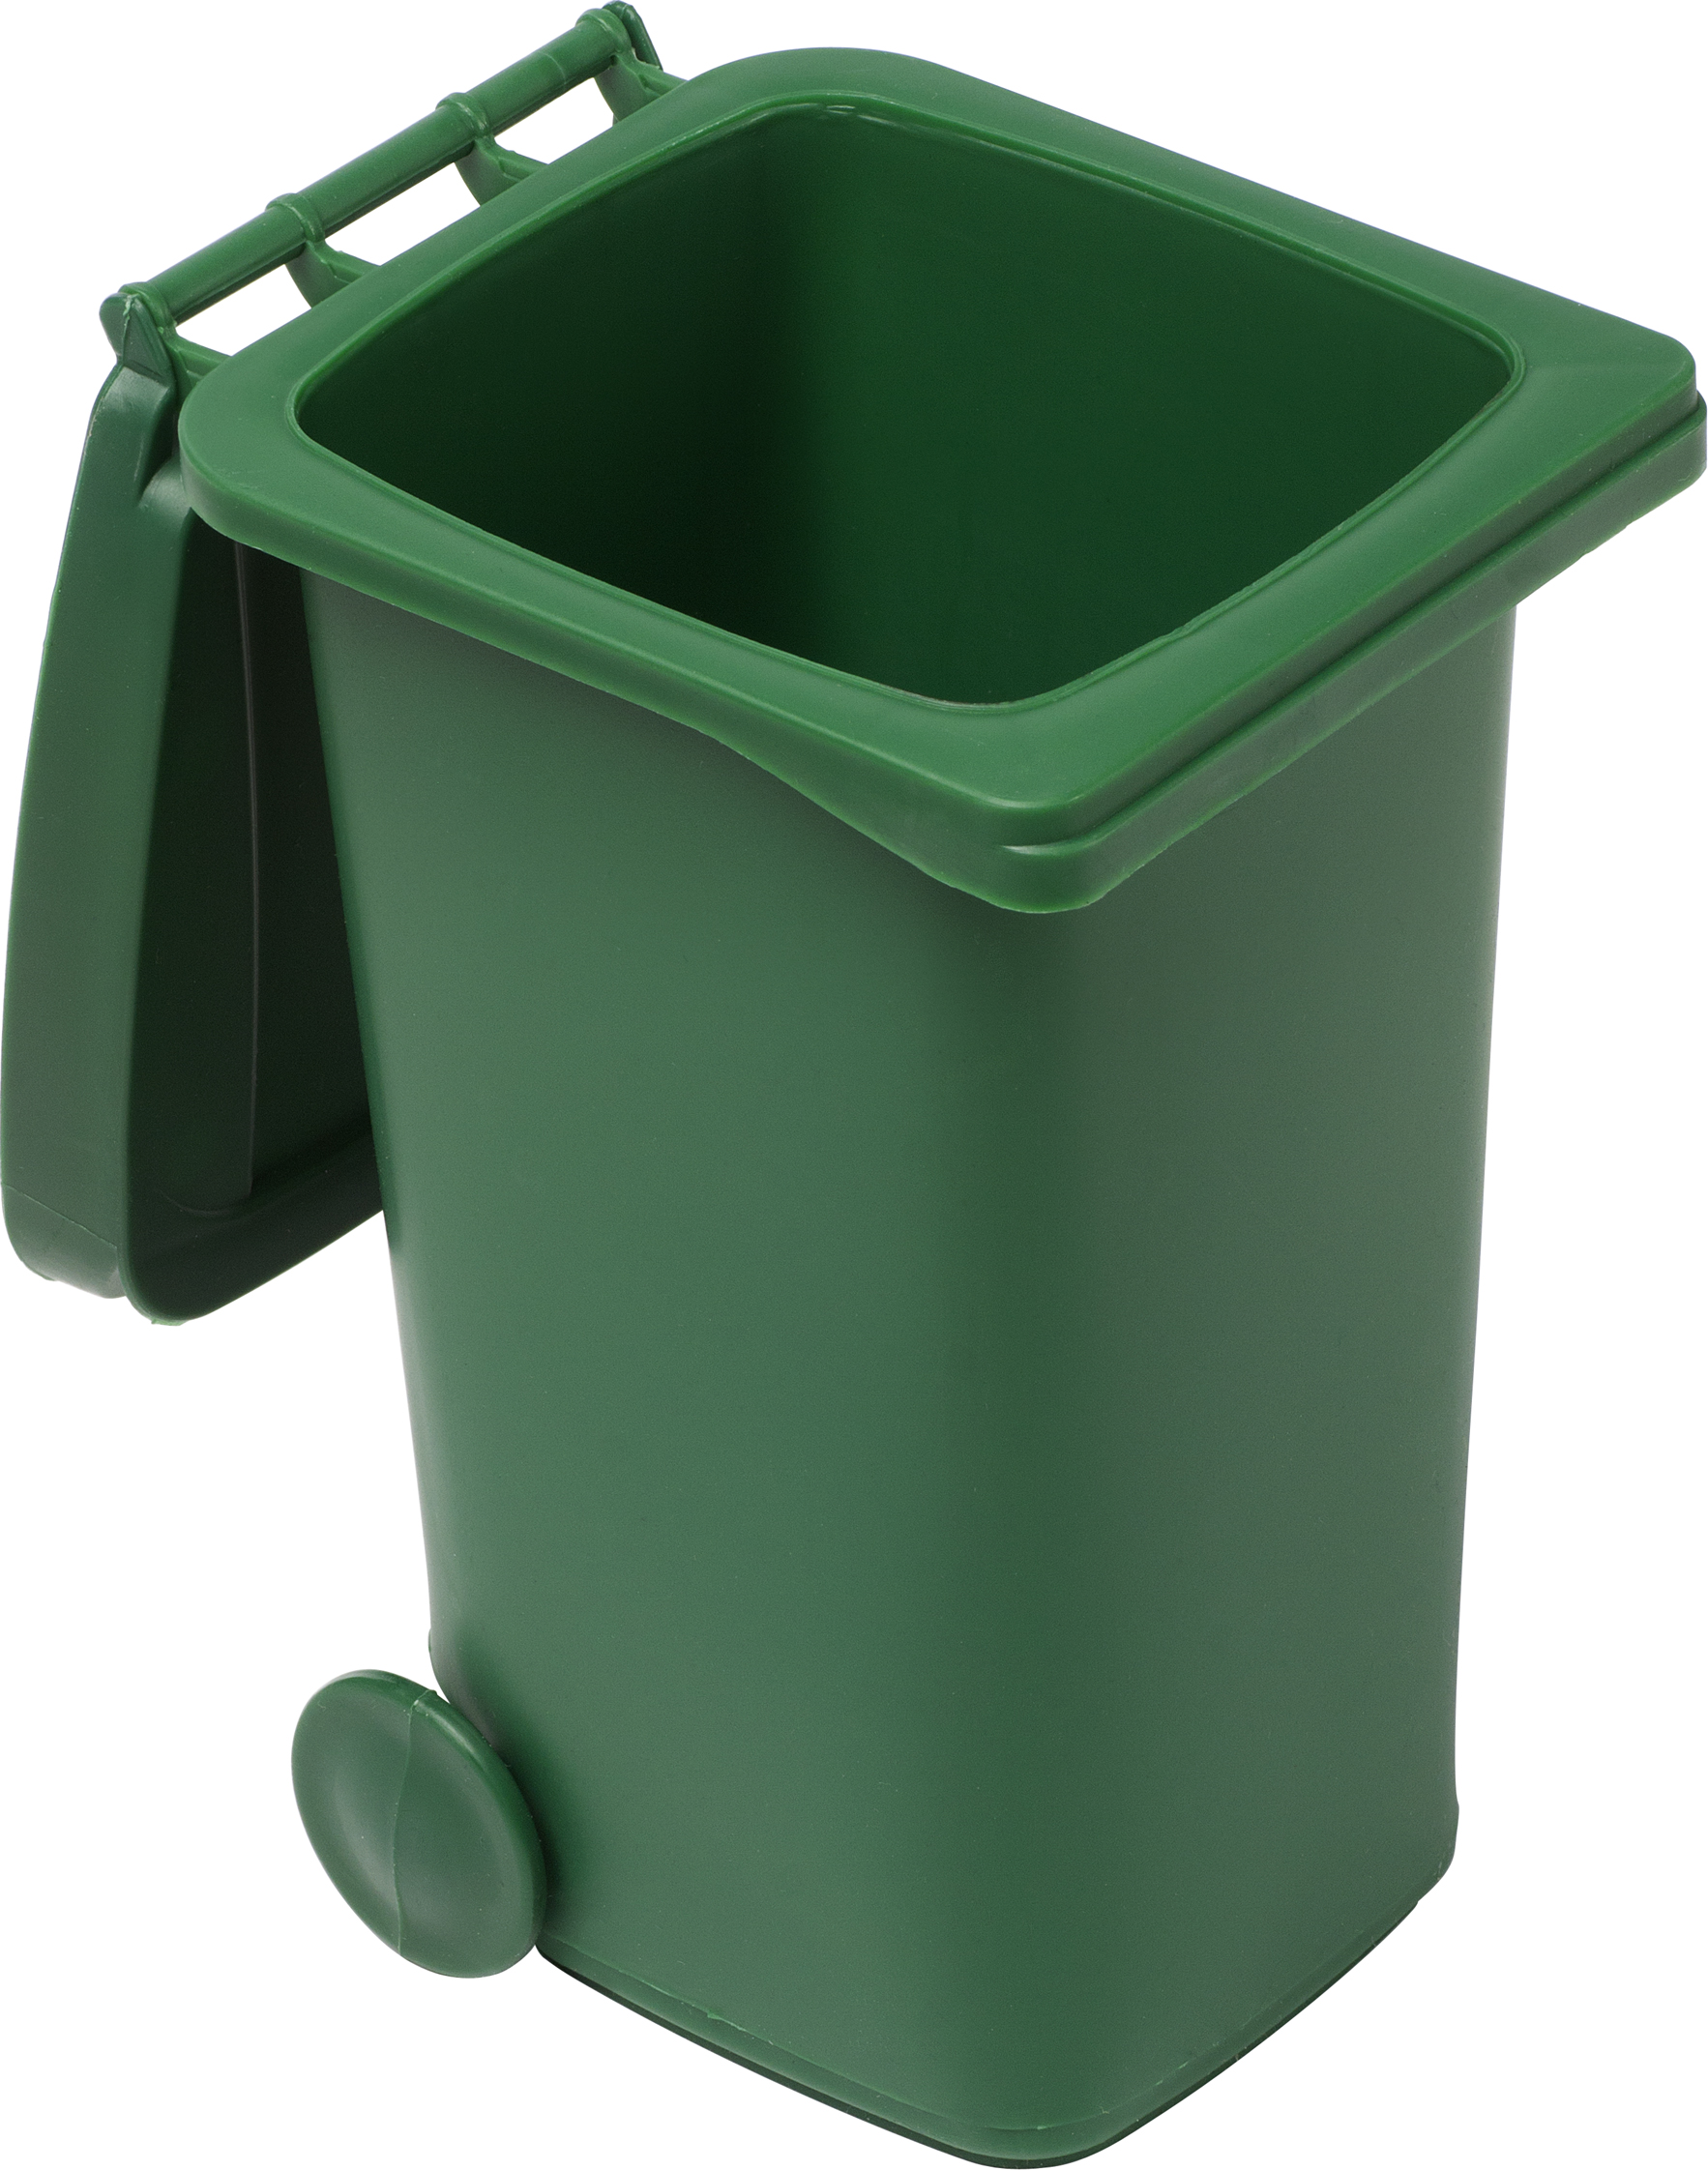 Trash bin. Корзина для мусора 11л (270*270*280) ап080 /20/. Мусорный бак. Ведро для мусора. Урна для мусора офисная пластиковая.